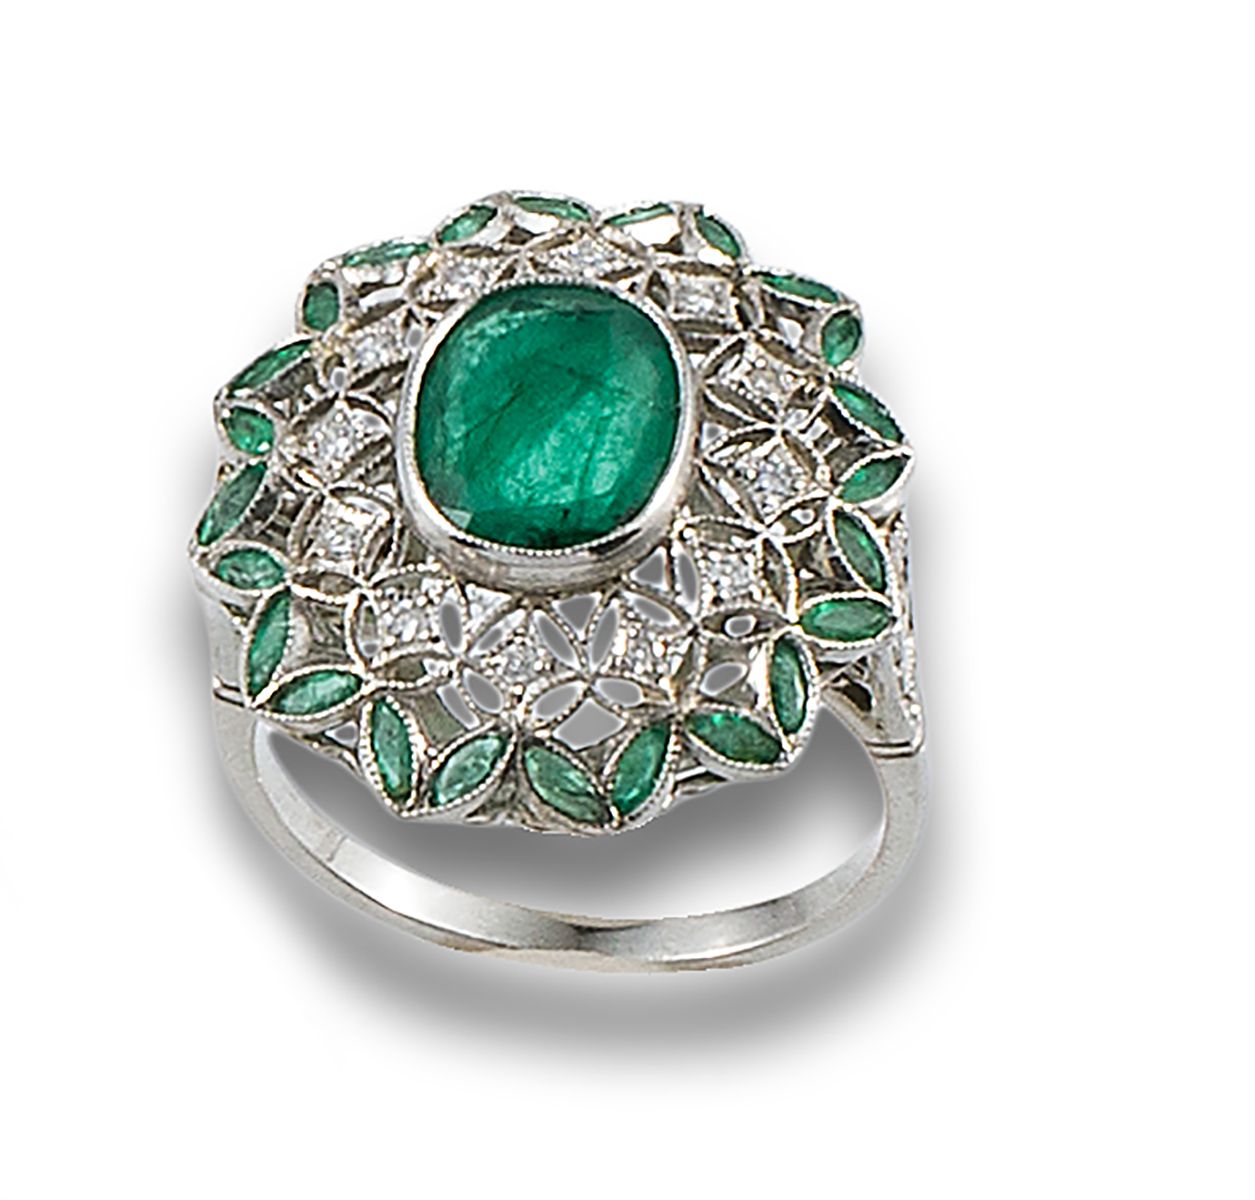 Ring, platinum antique style. 由中央的祖母绿形成，椭圆形切割，镶嵌在chaton和边框的钻石，明亮式切割和校准的祖母绿。镂空支架。